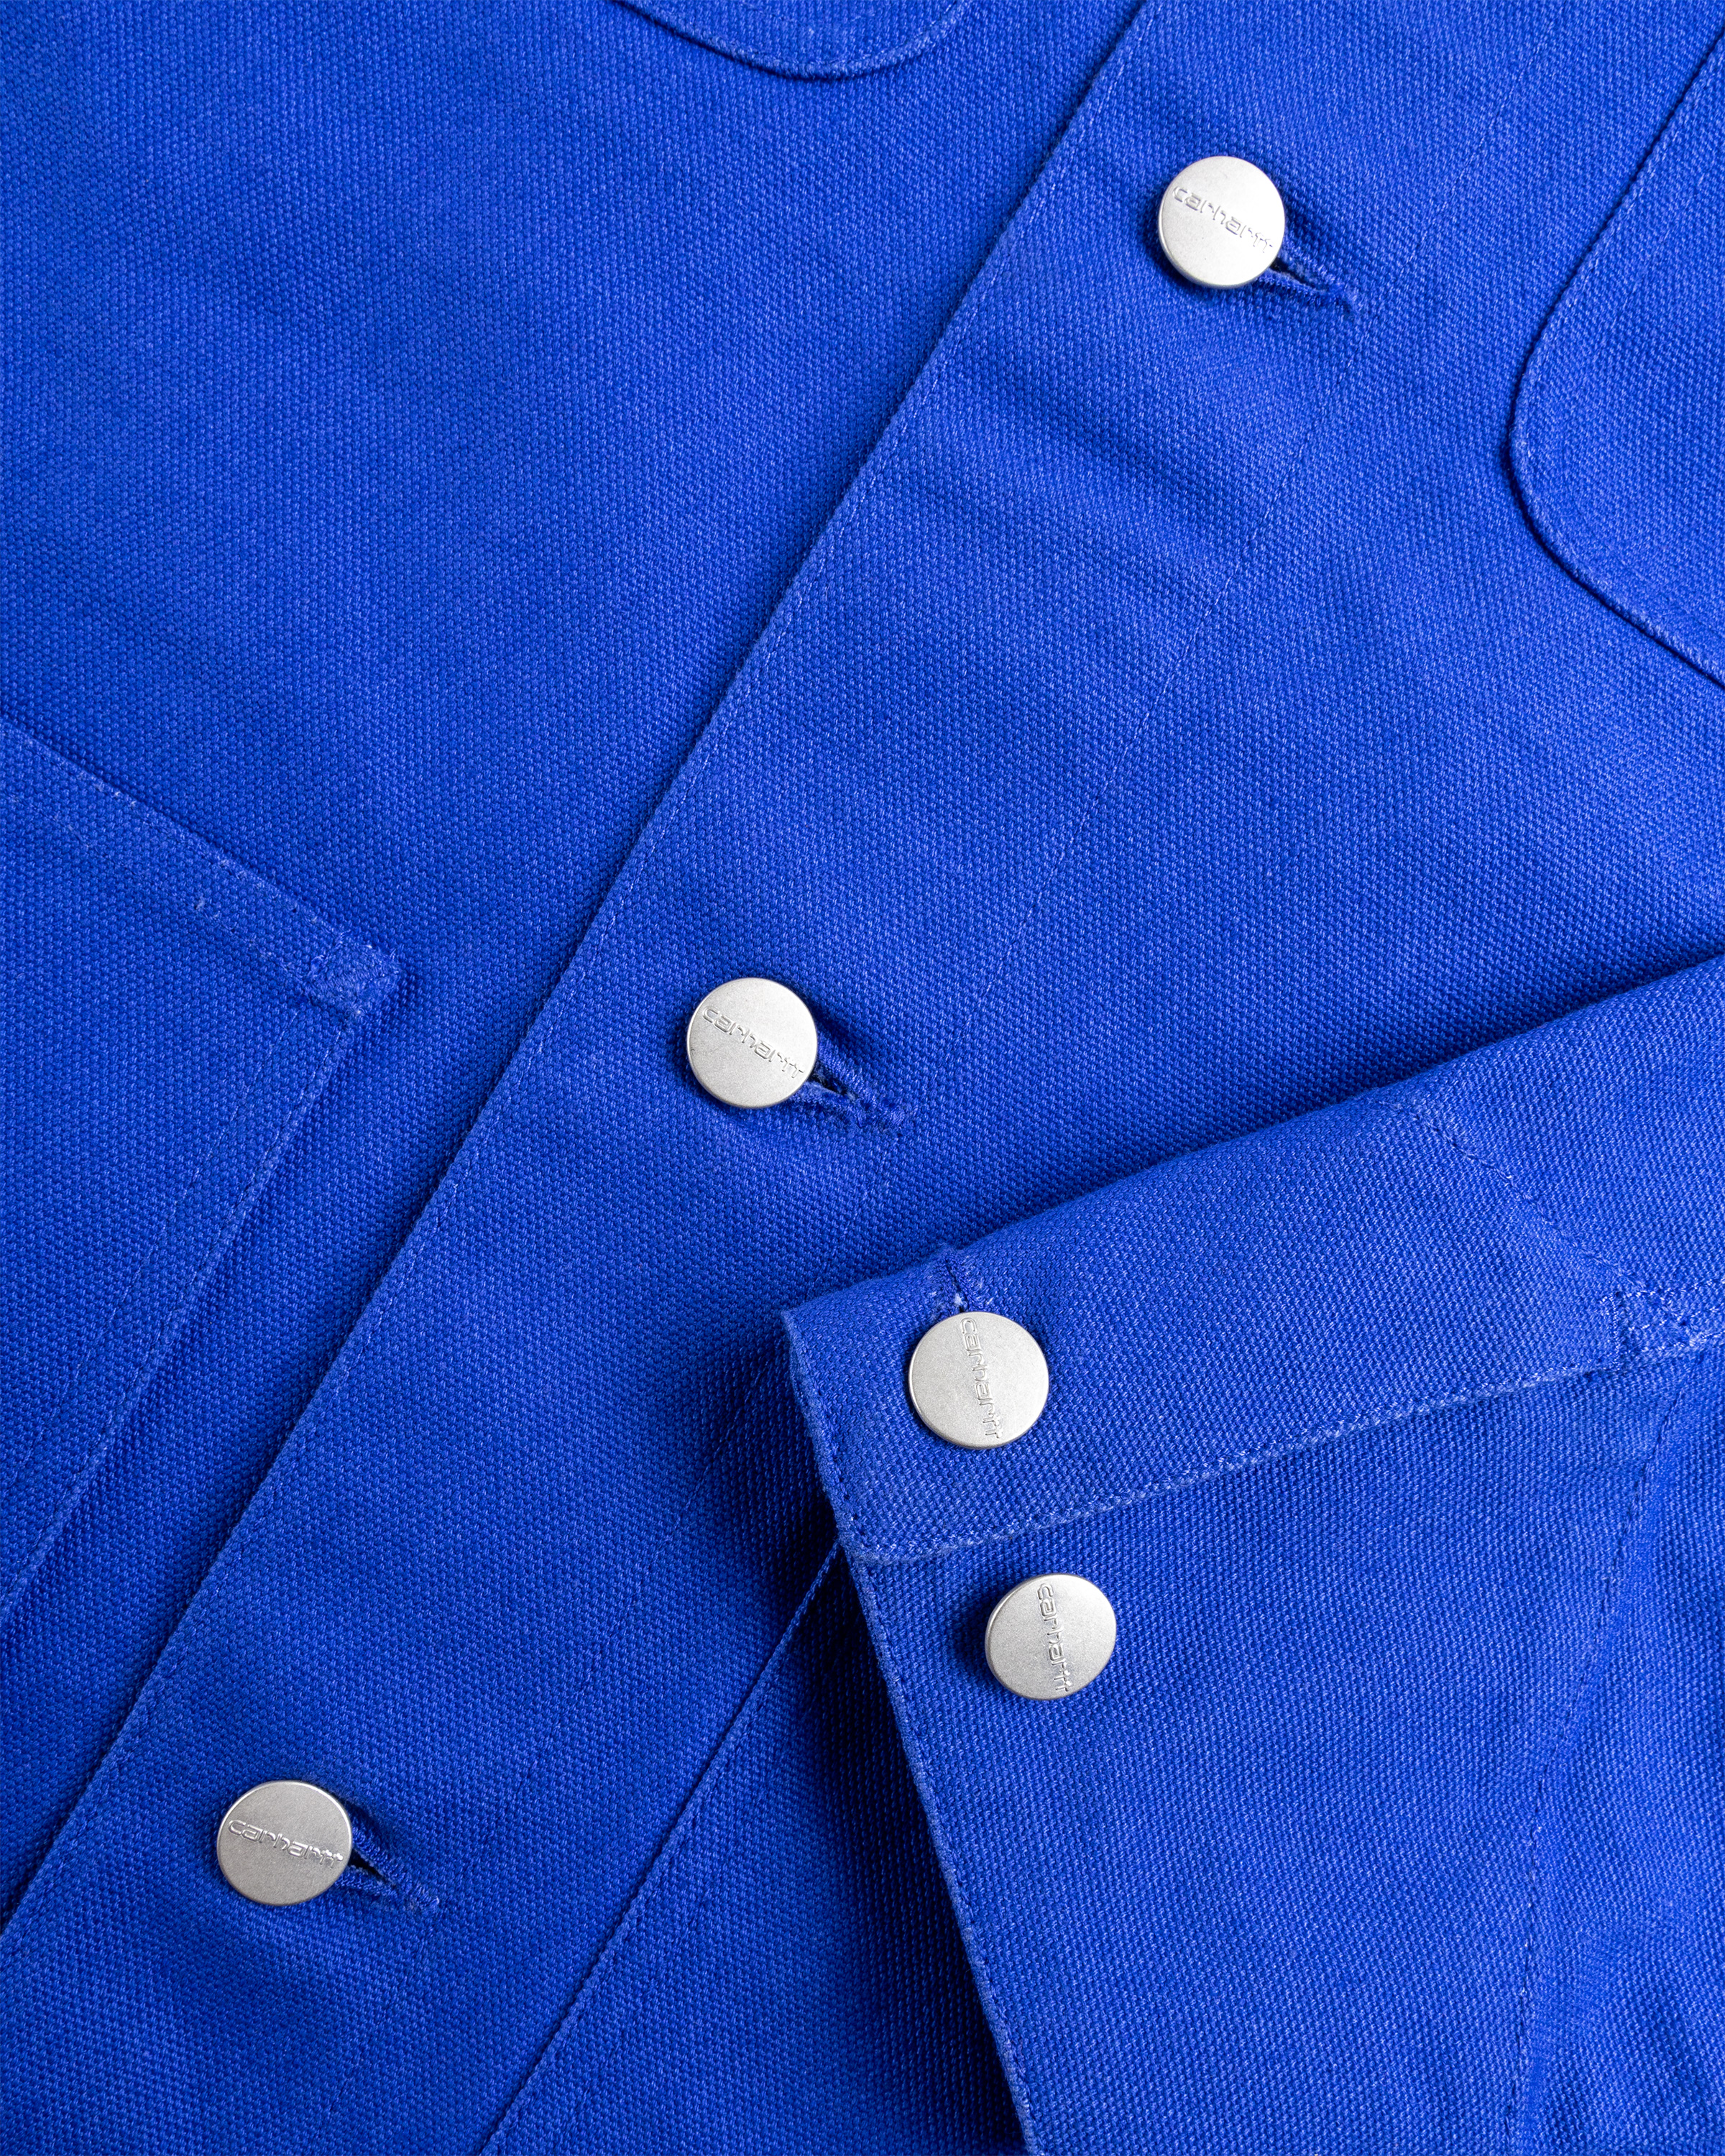 Carhartt WIP x Tresor – Way Of The Light Michigan Coat Lazurite/Dark Grey Reflective - Outerwear - Blue - Image 7